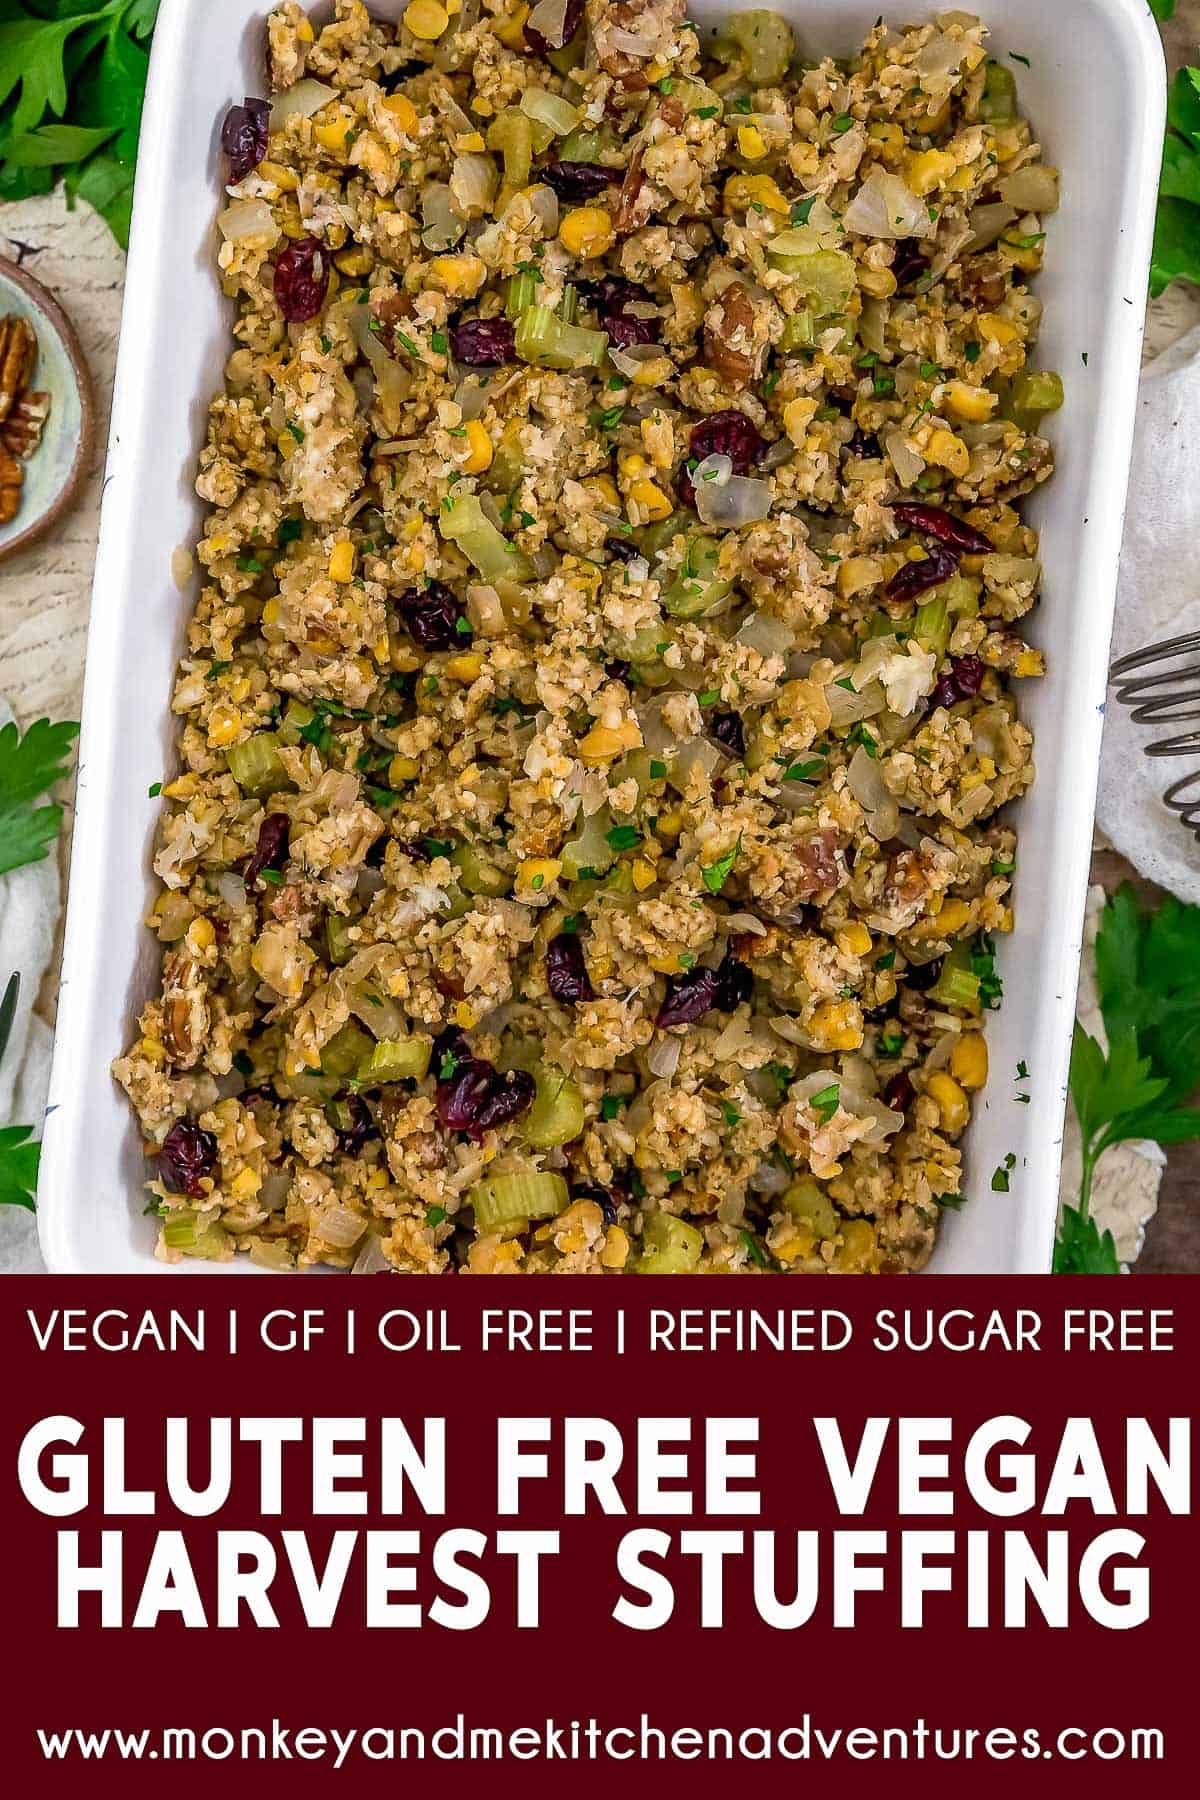 Gluten Free Vegan Harvest Stuffing with text description